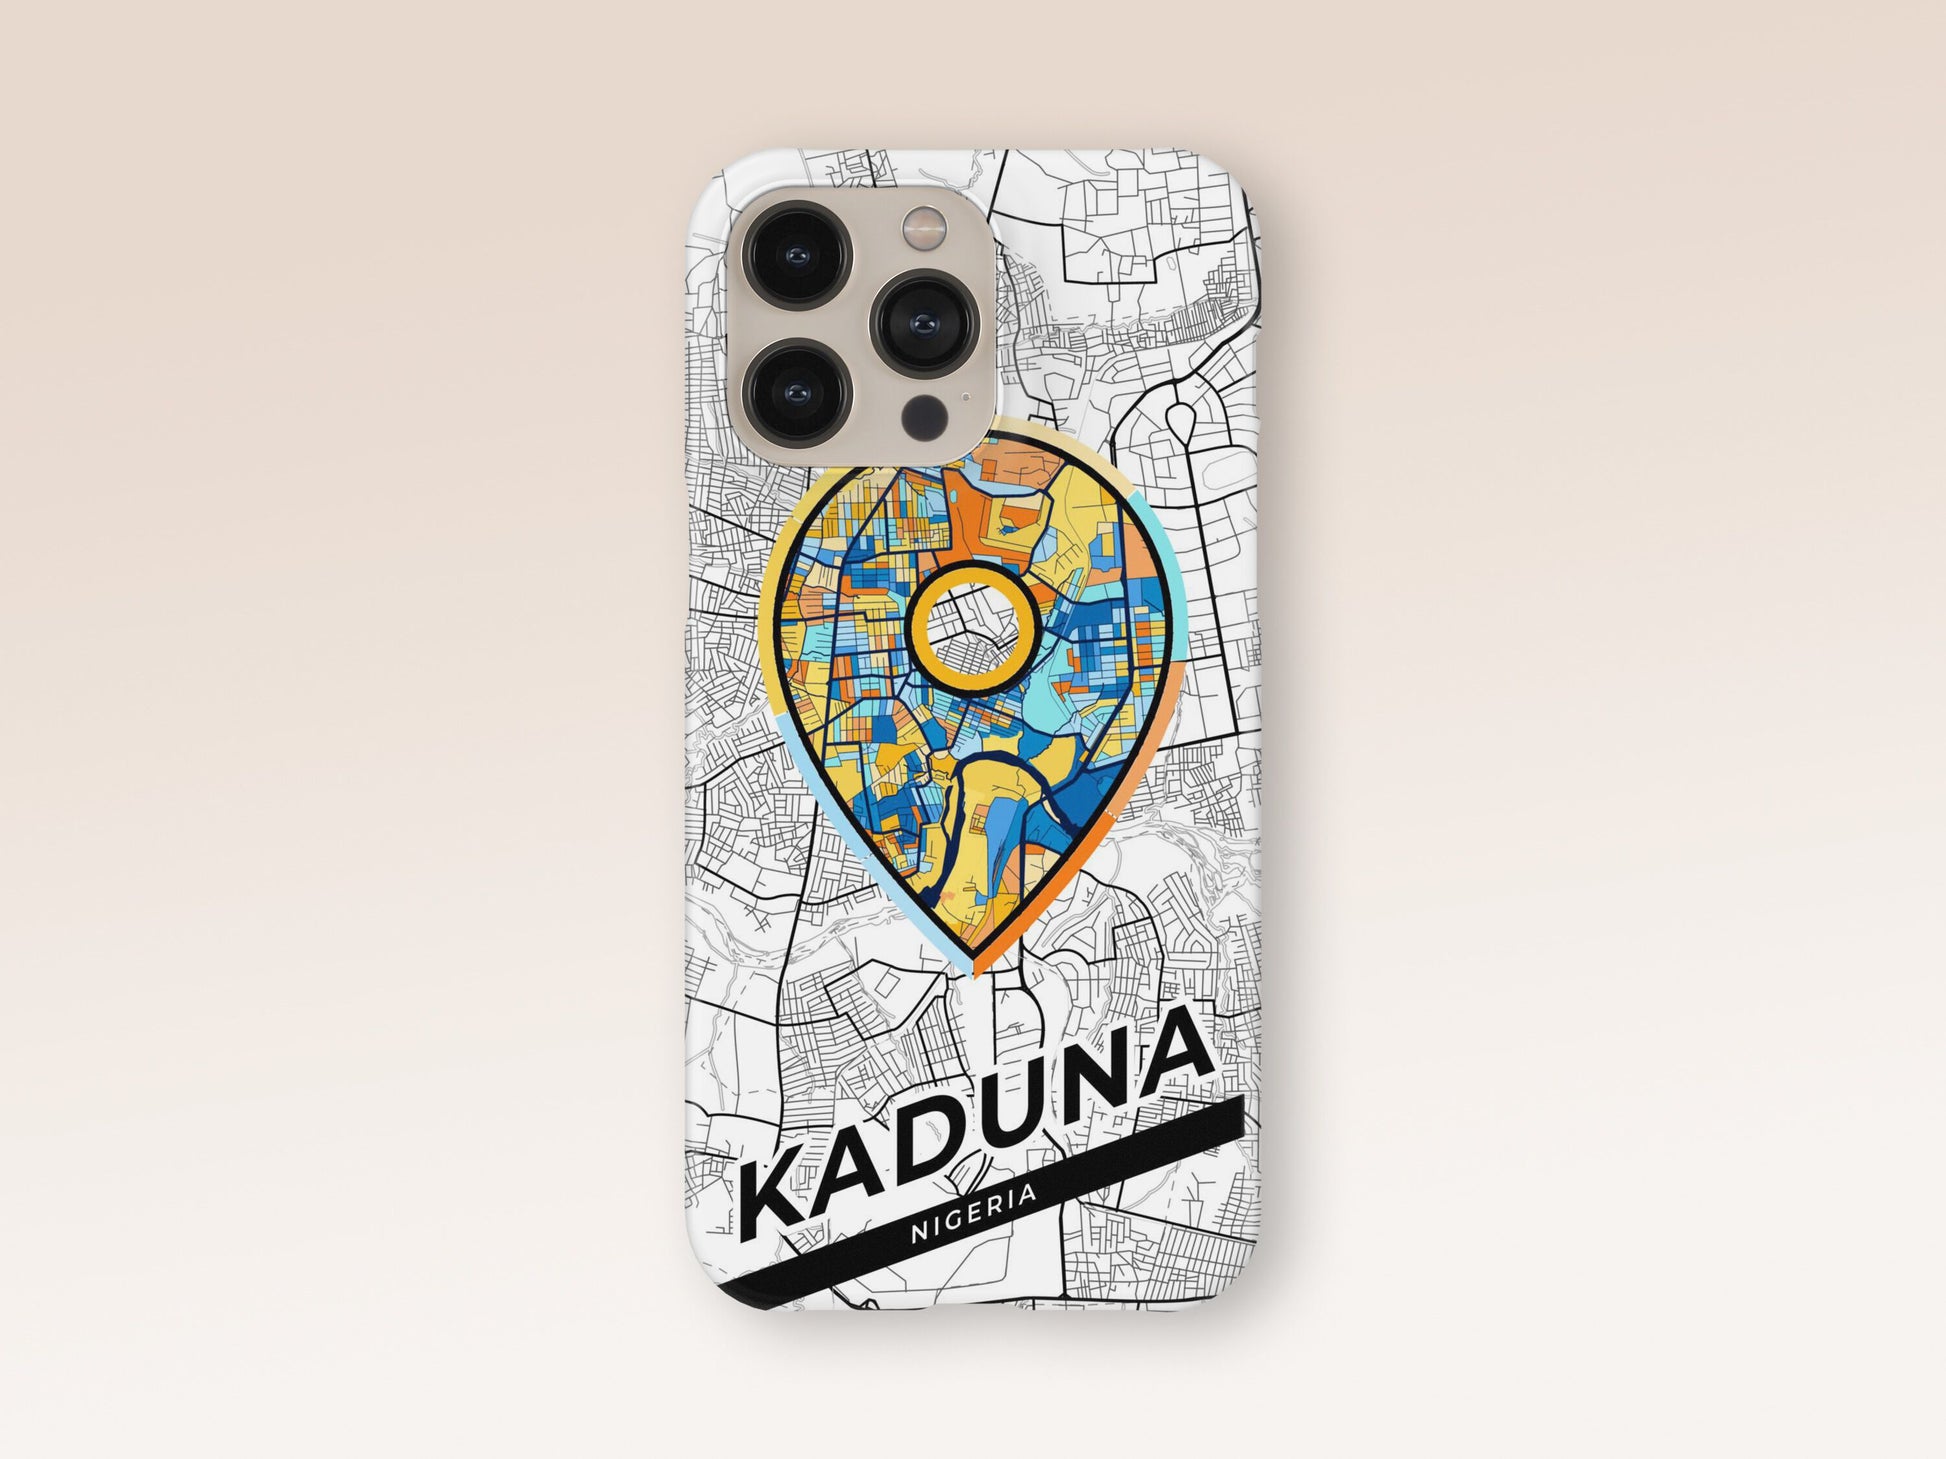 Kaduna Nigeria slim phone case with colorful icon. Birthday, wedding or housewarming gift. Couple match cases. 1